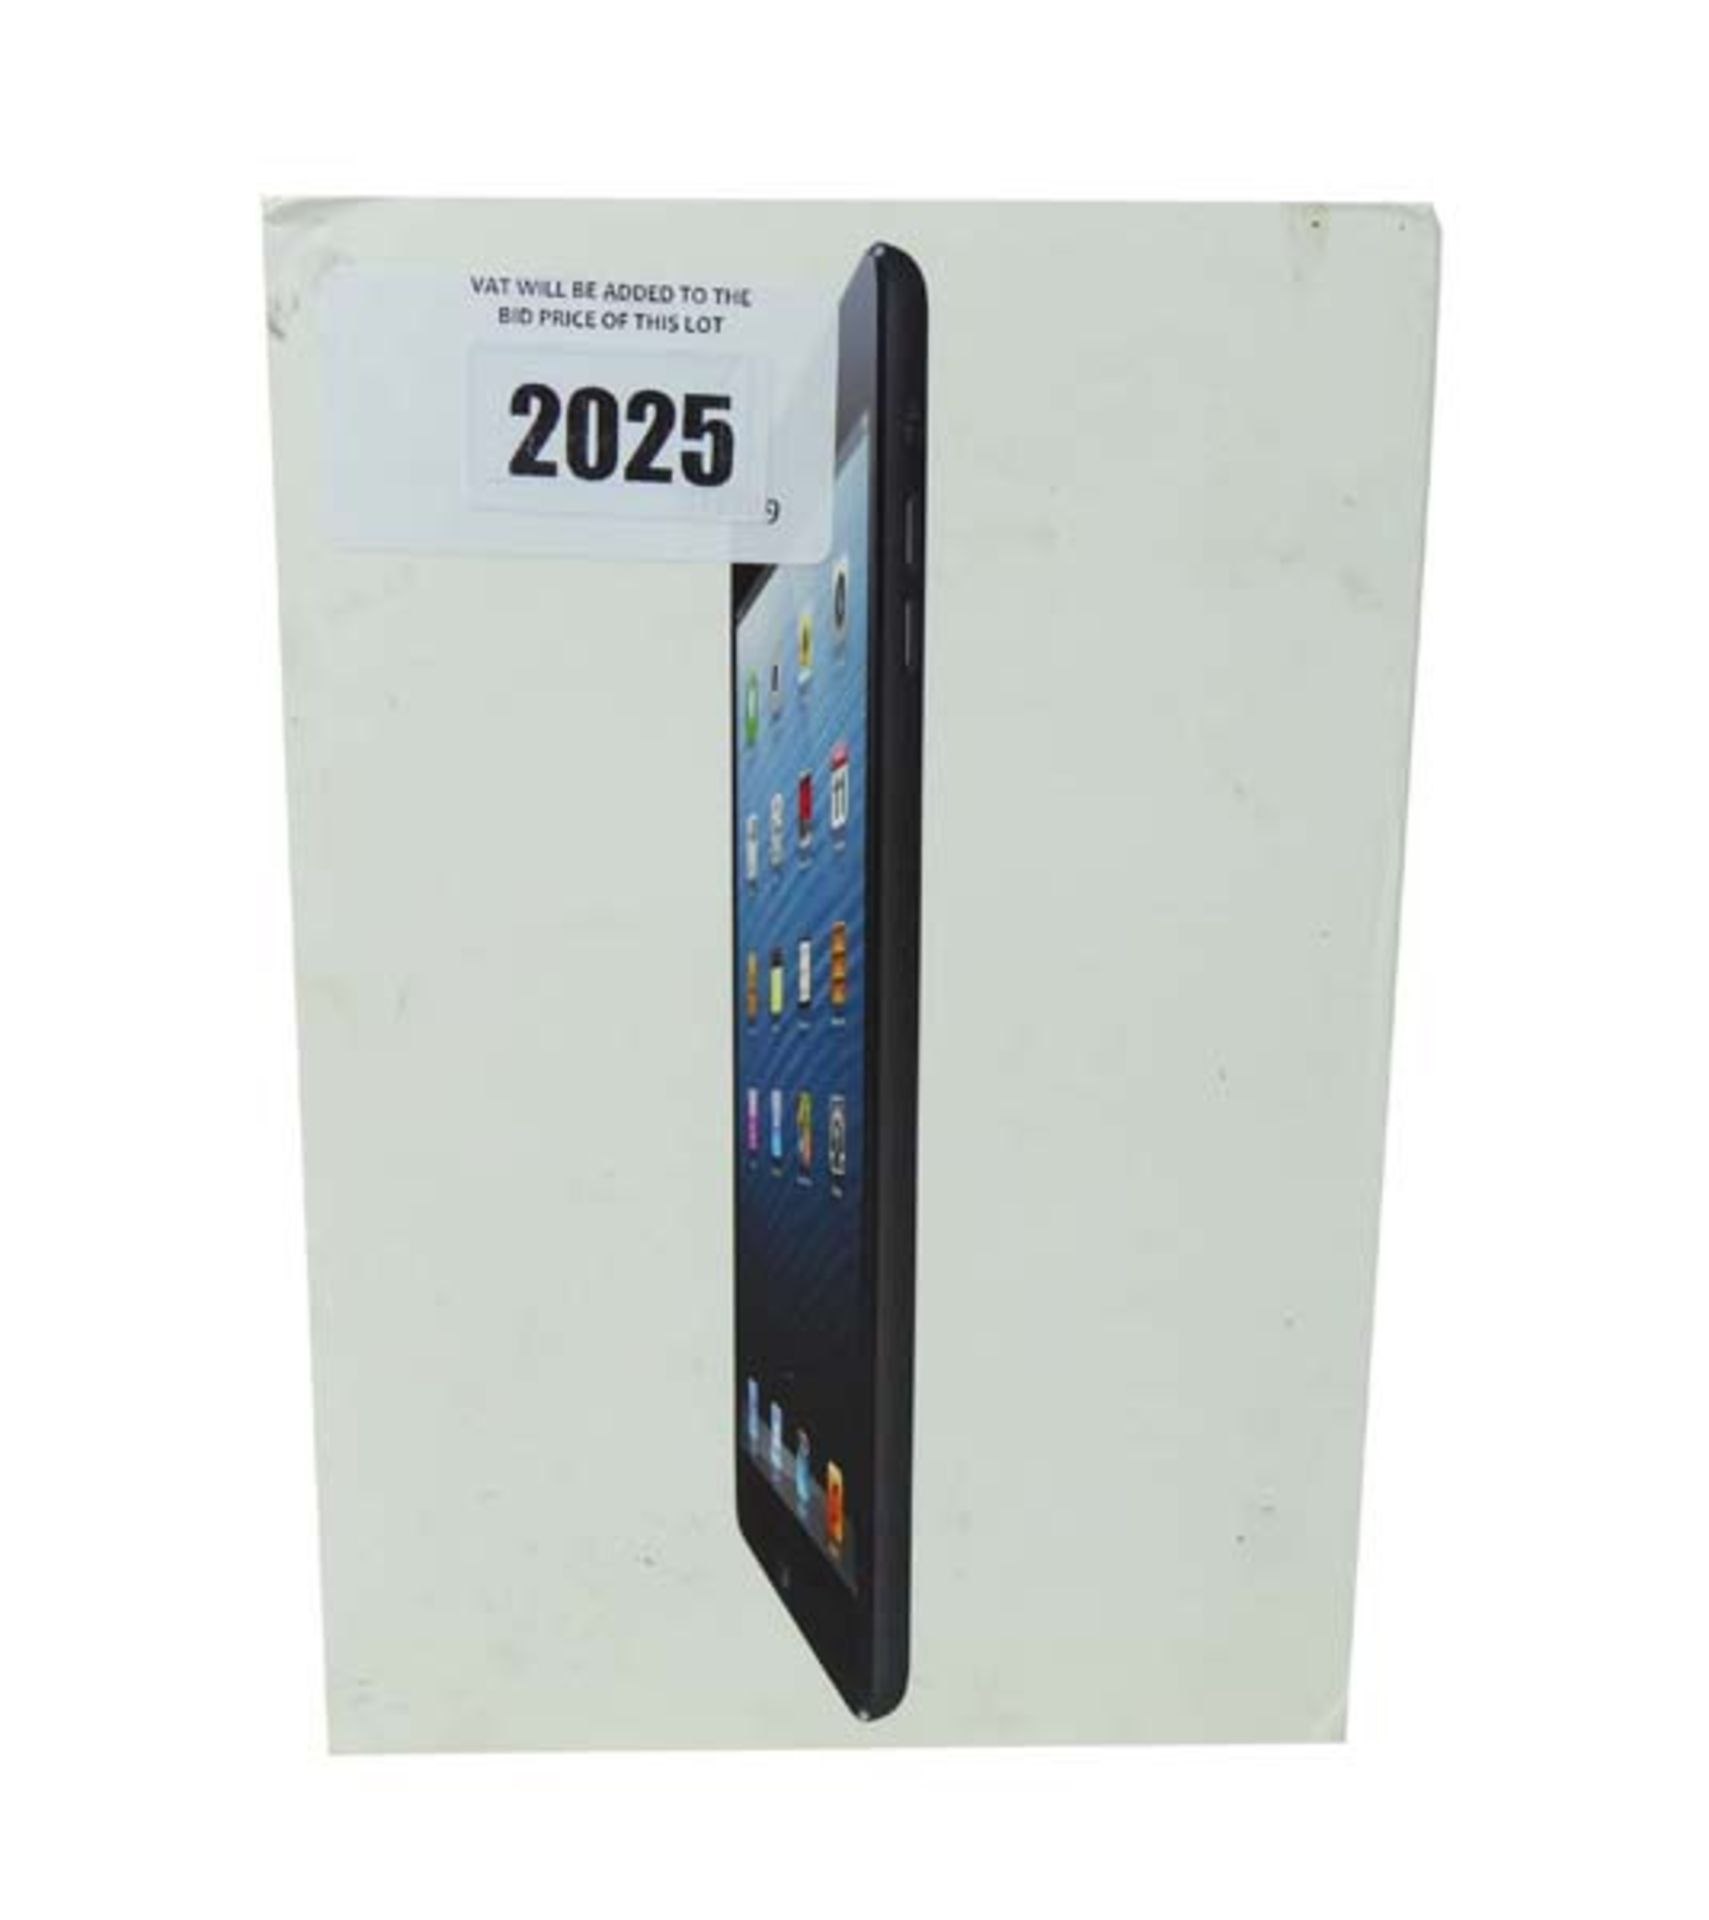 iPad Mini 32GB Black tablet with box (A1432 2012) - Image 3 of 3